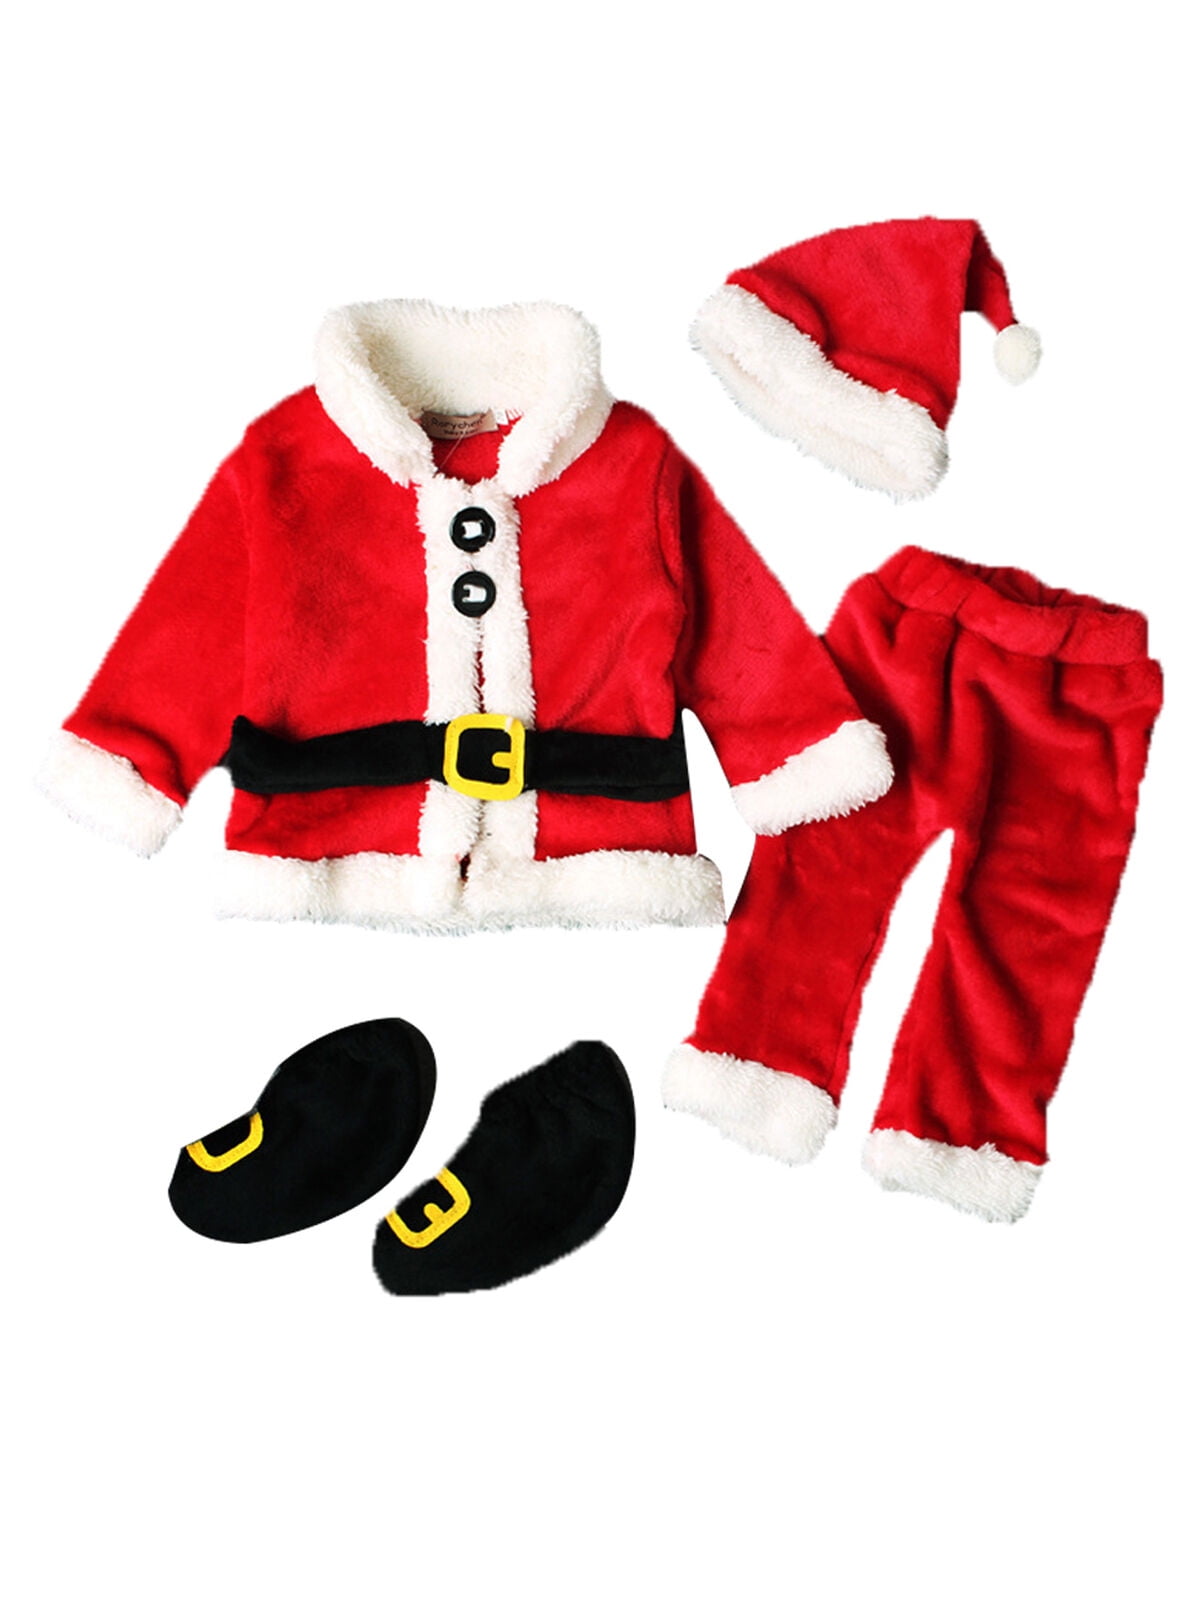 4PCS Santa Claus Cothes Kids Baby Suit Christmas Party Outfit Fancy Xmas Dress 